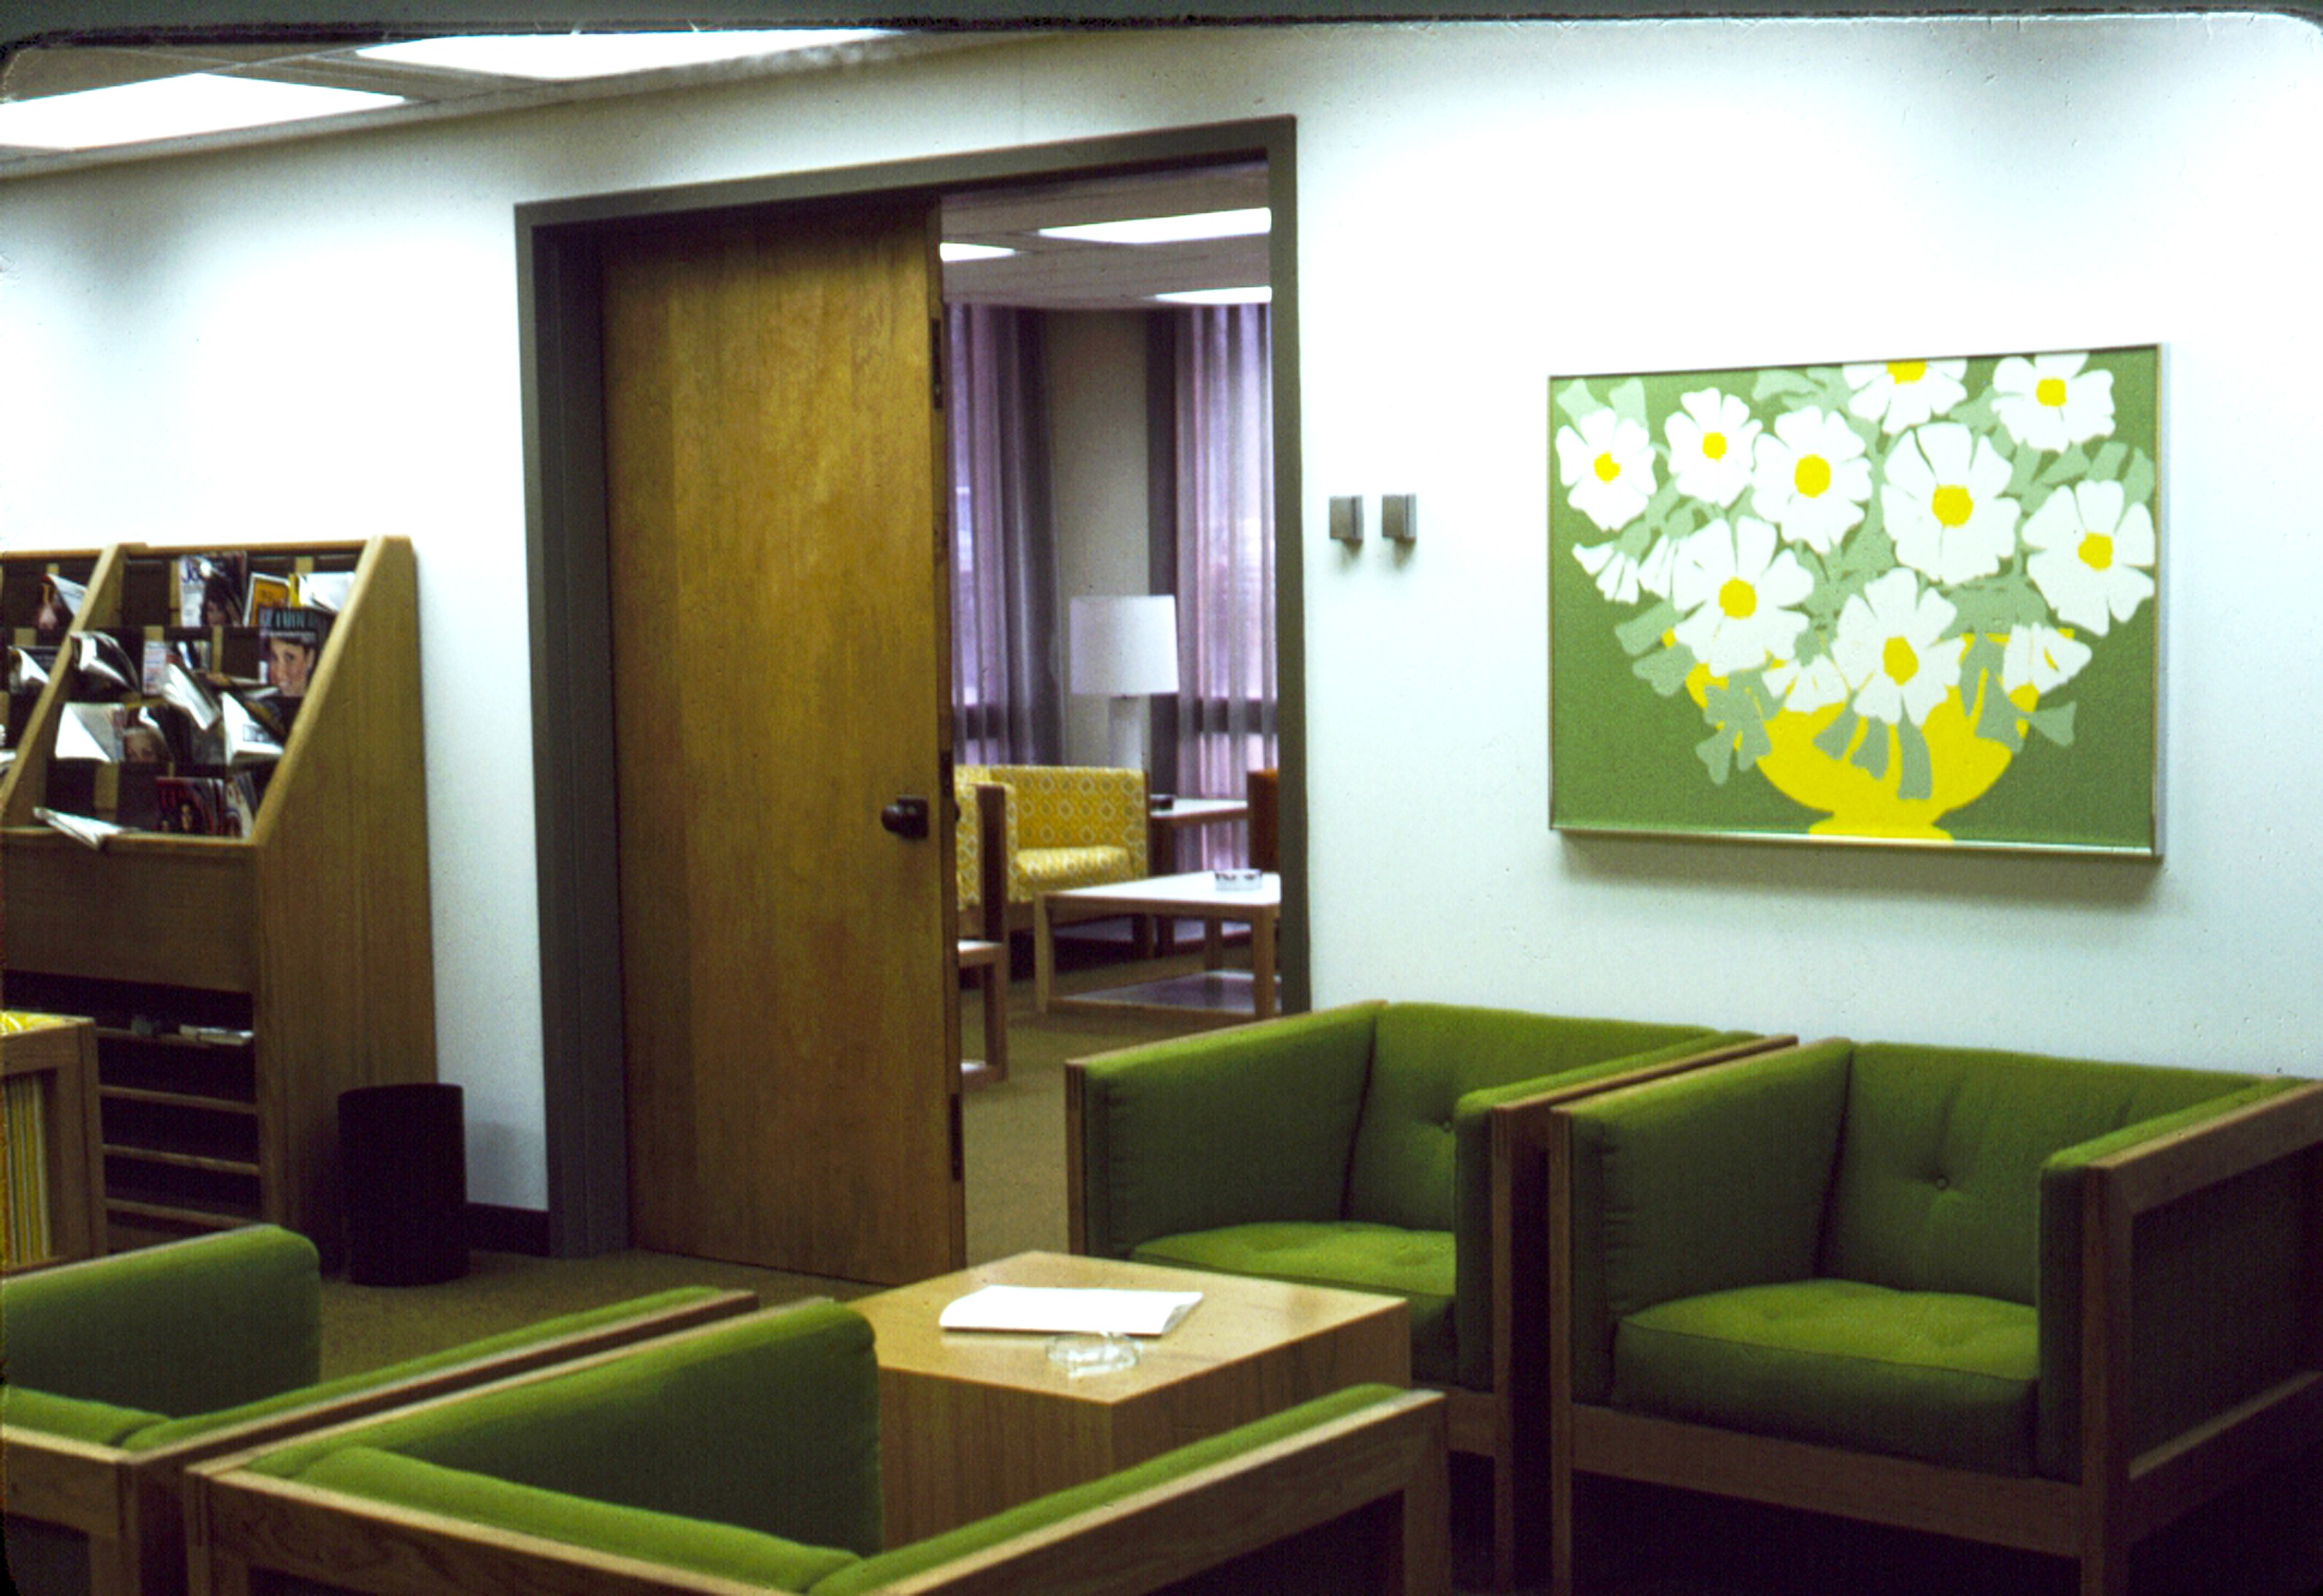 1976-library-interior-leisurereading 3000 edit